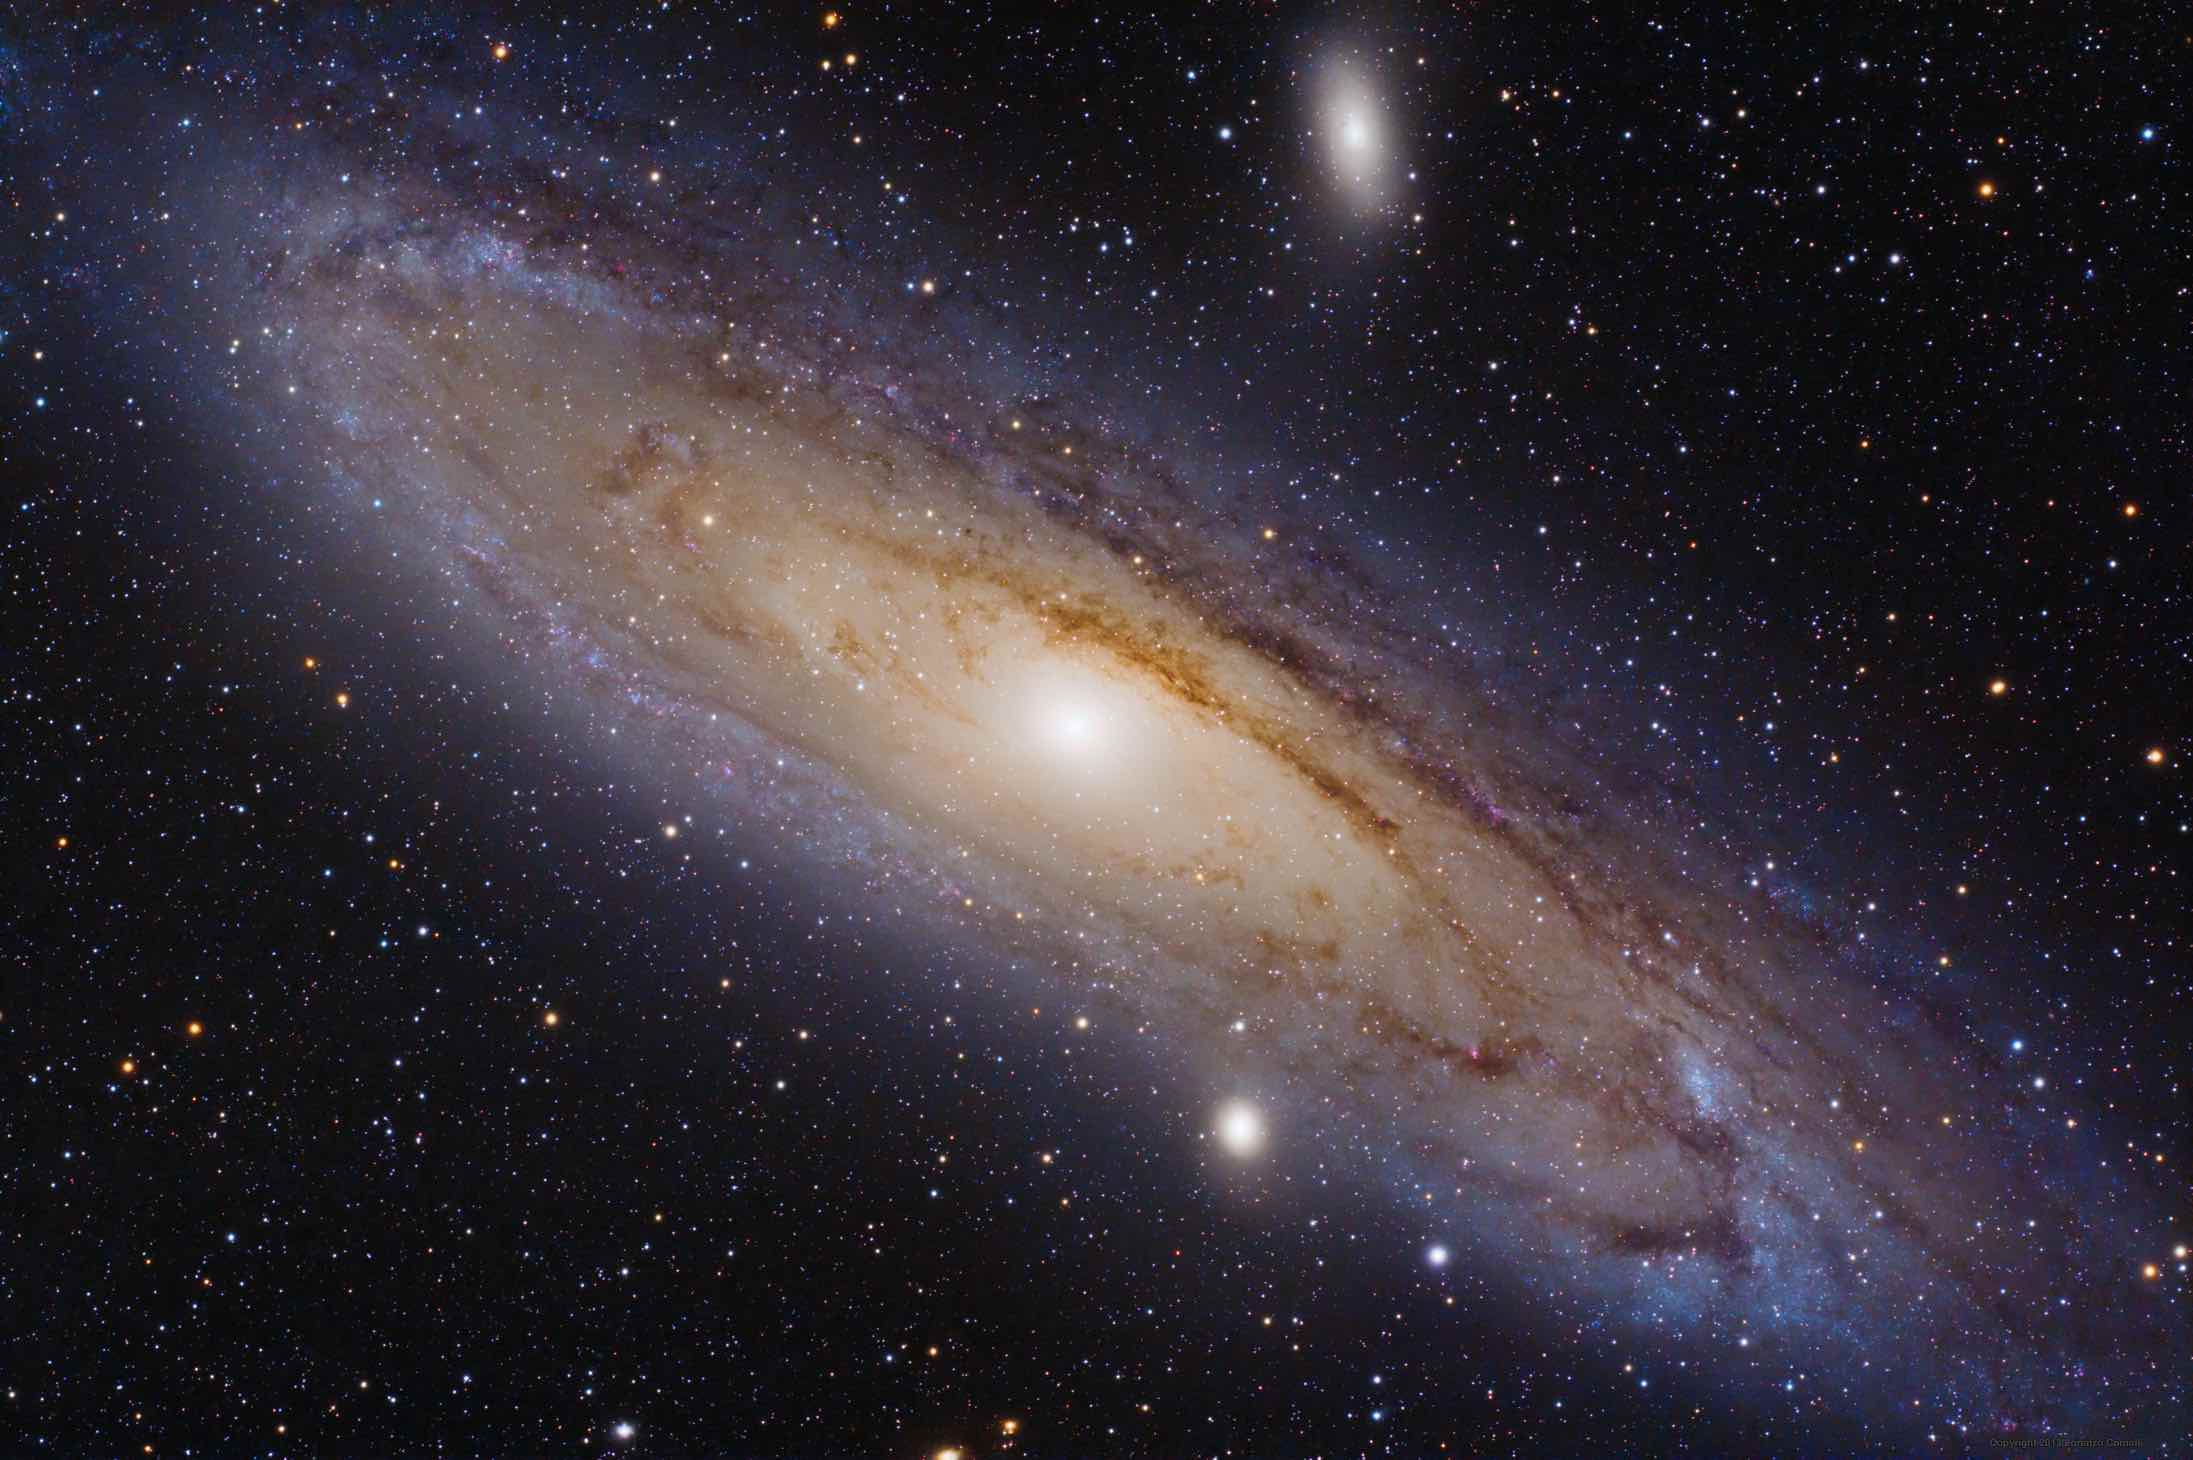 Telescopic image of the Andromeda galaxy.